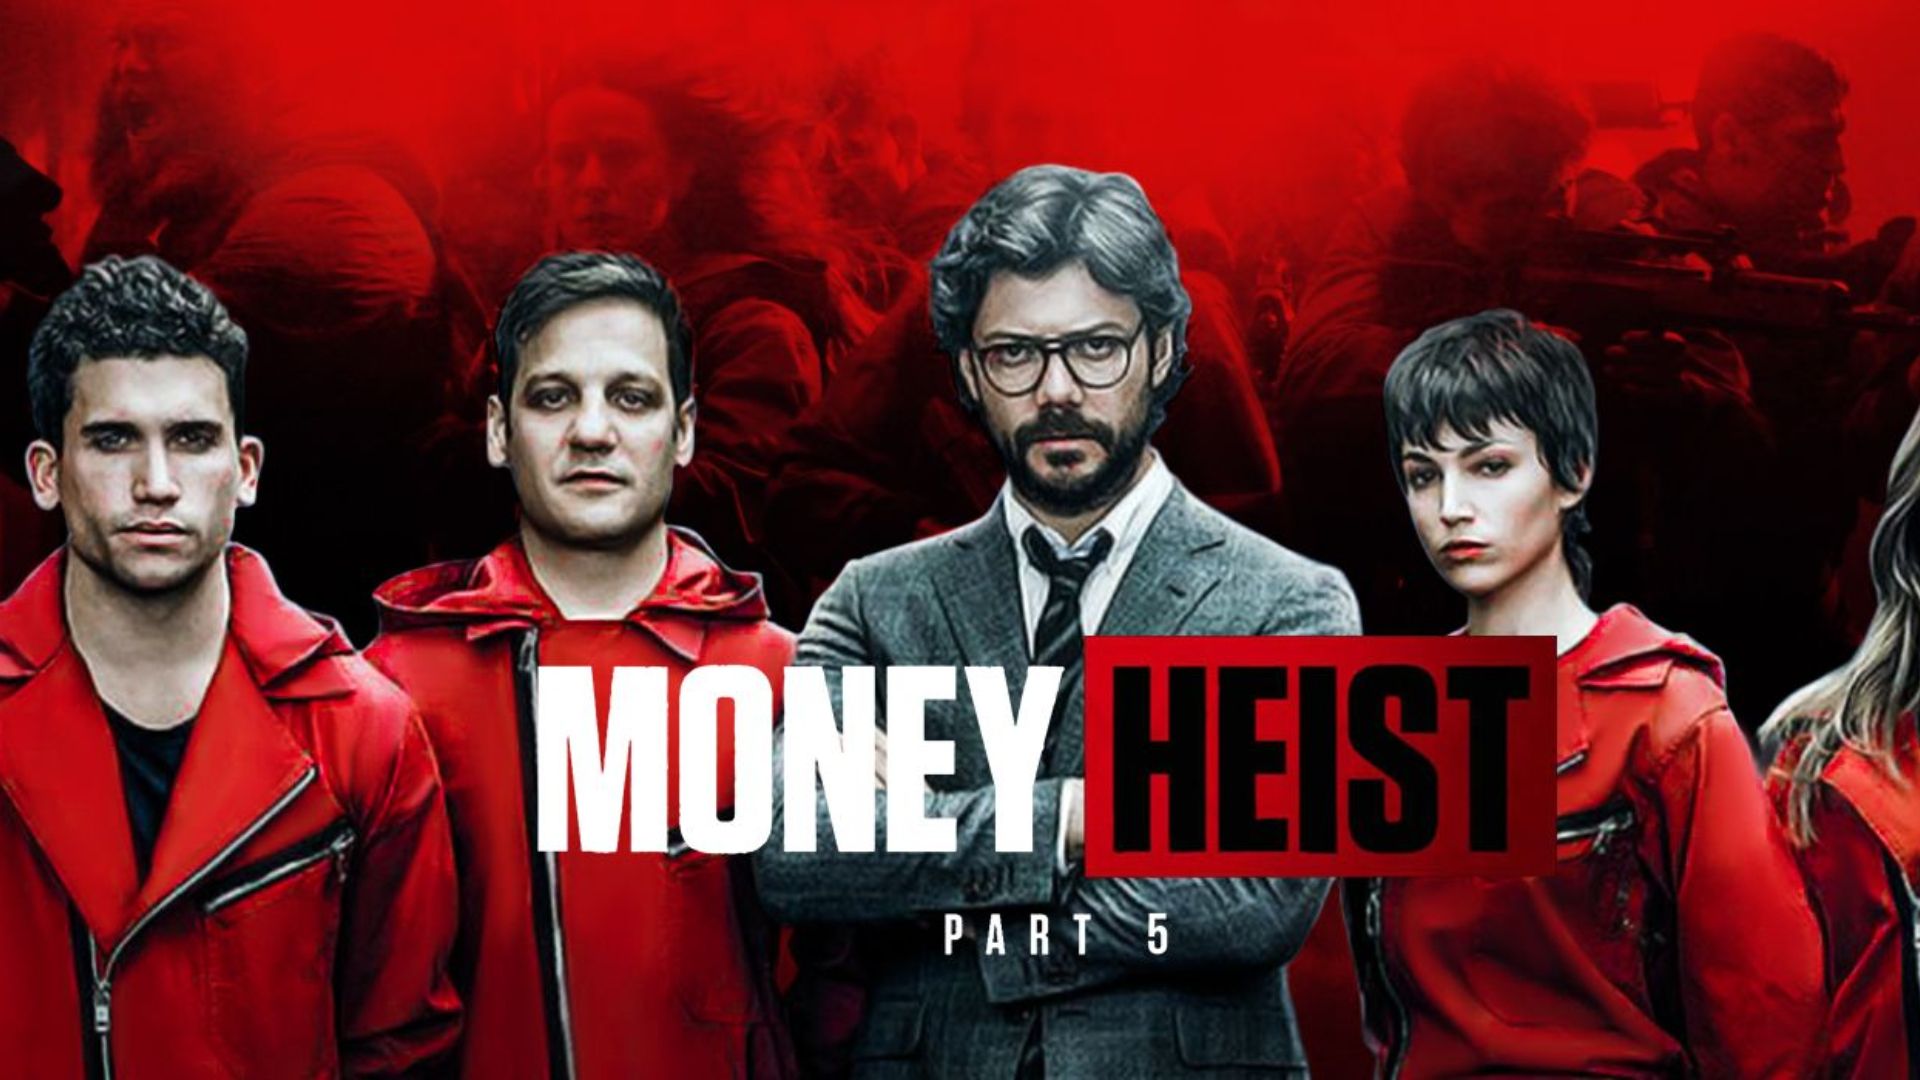 Money Heist Season 5 Wallpaper - Money Heist Part 5 Background, Photo & Image